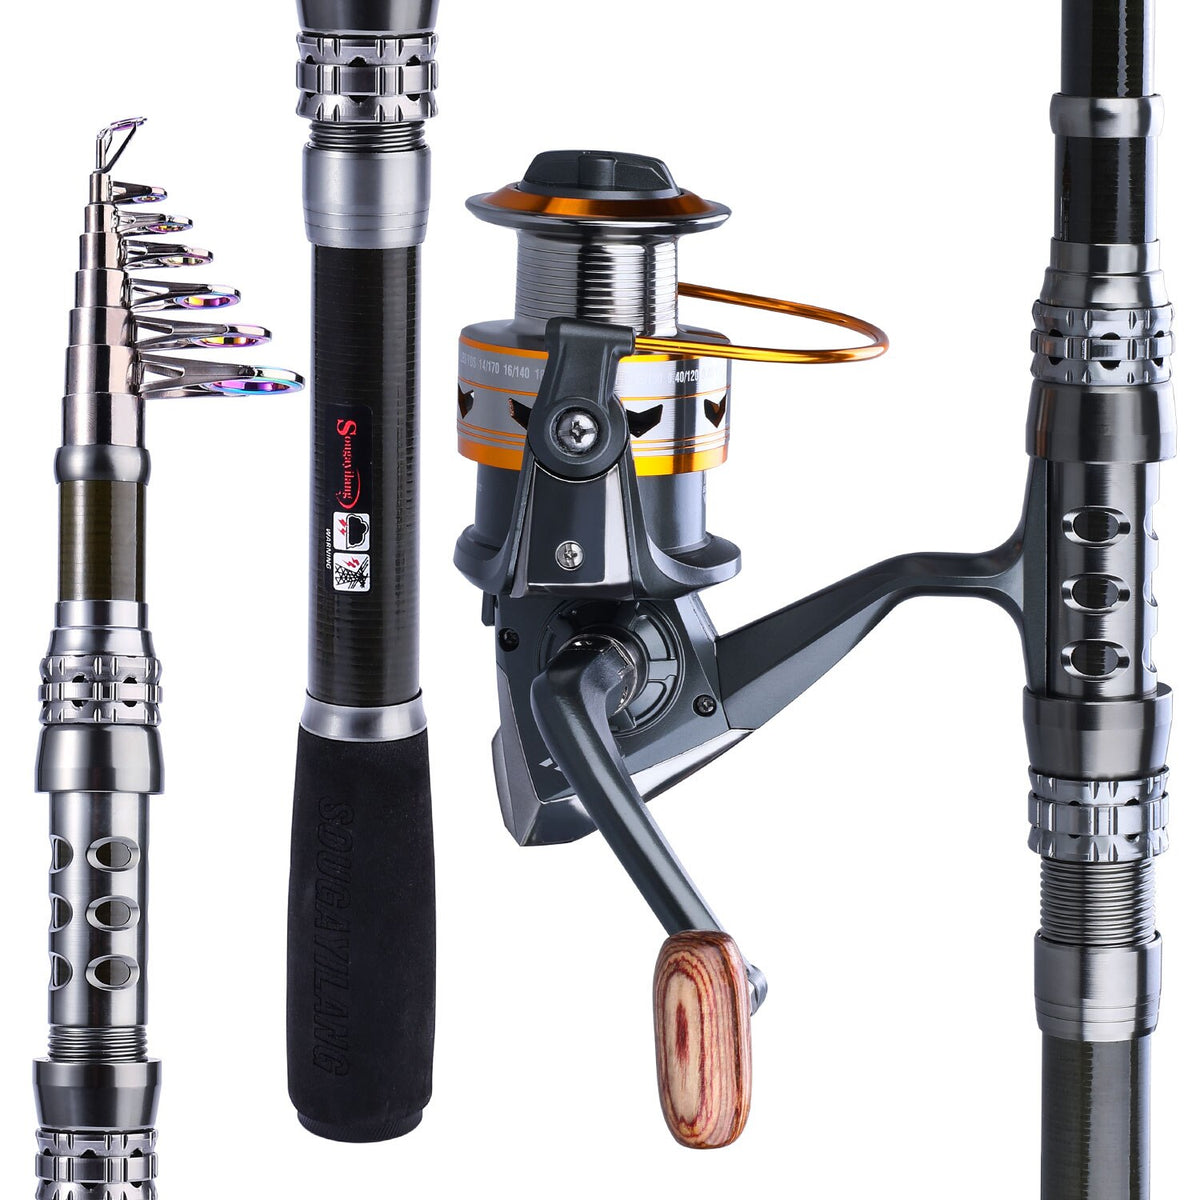 Buy Sougayilang Fishing Rod Carp Rods Carbon Fiber Spinning